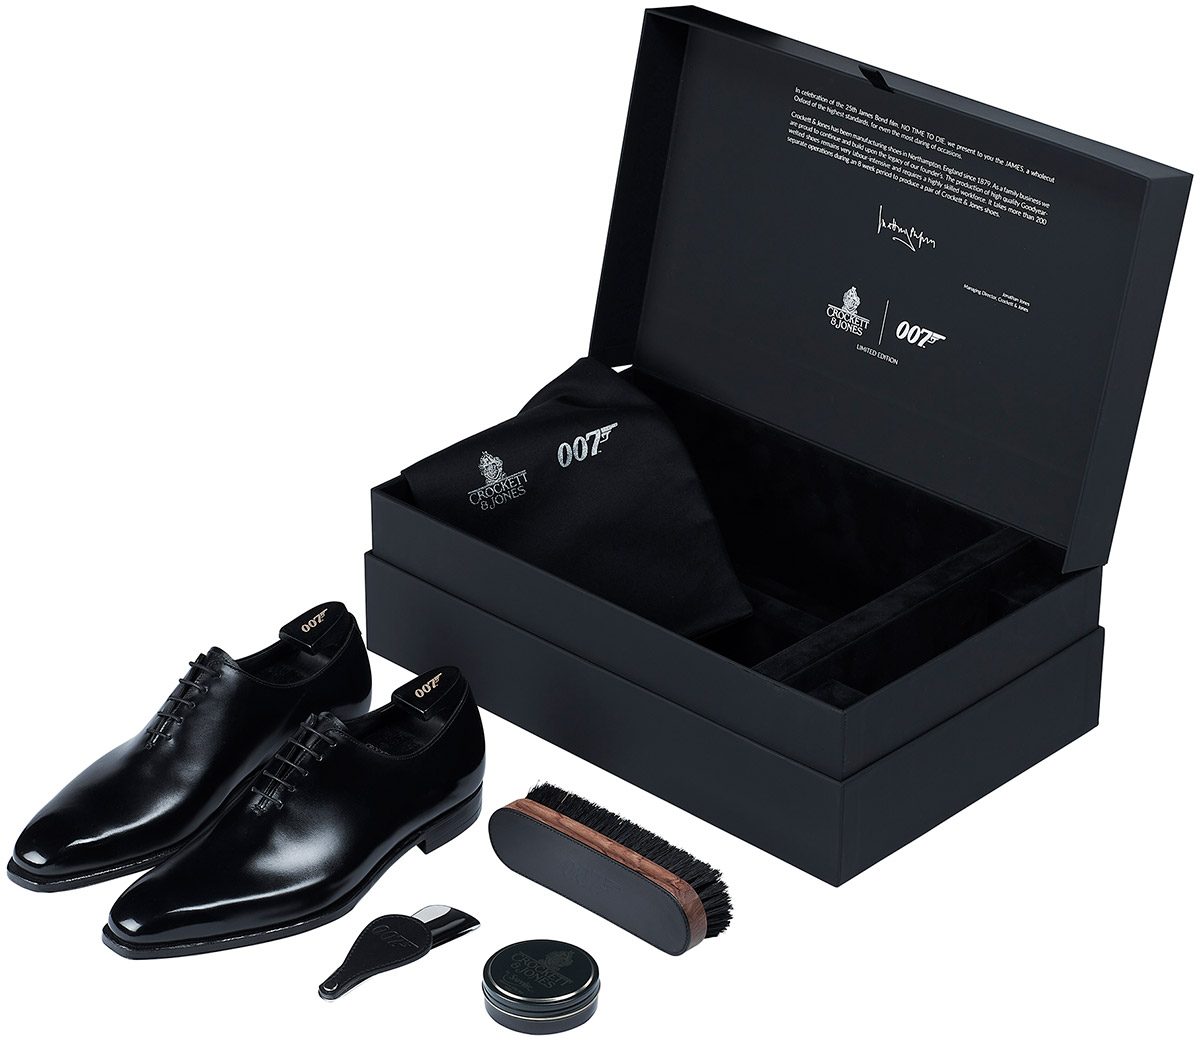 Crockett & Jones release James 007 Limited Edition shoe to 